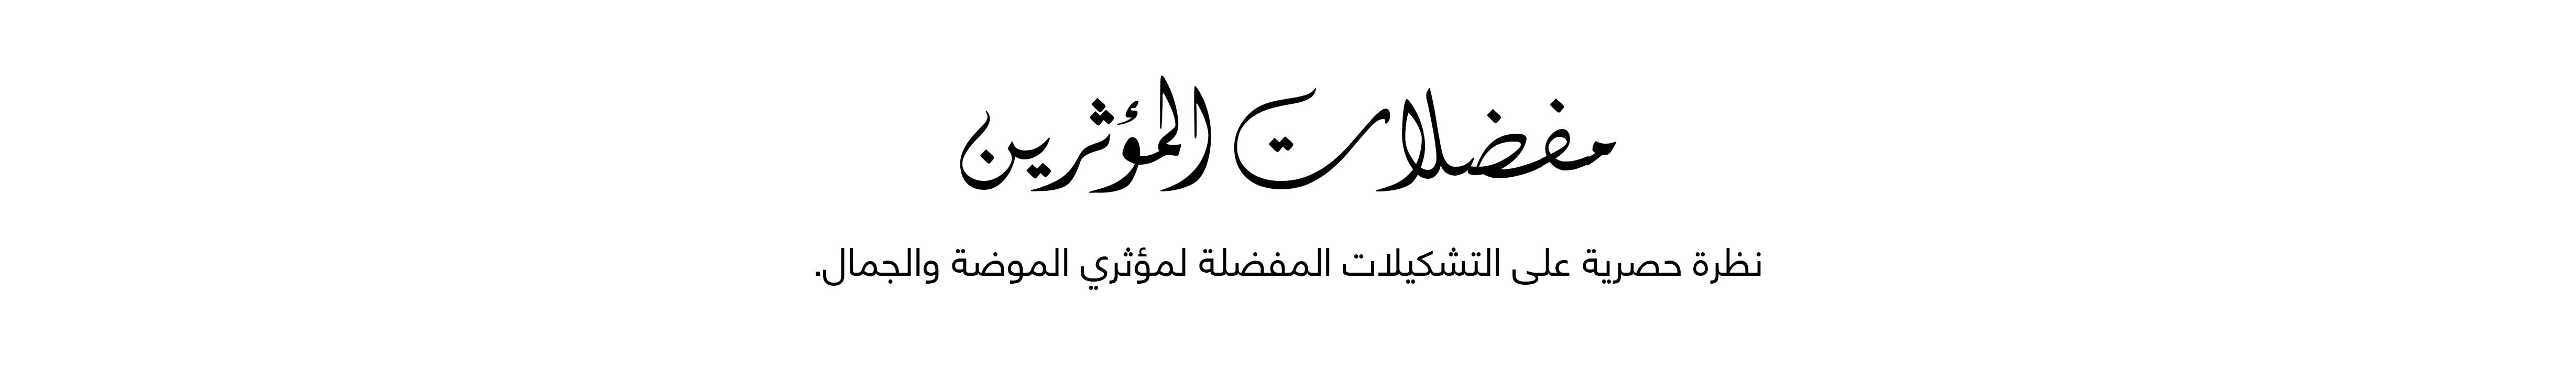 InfluencerCloset-Header-Arabic